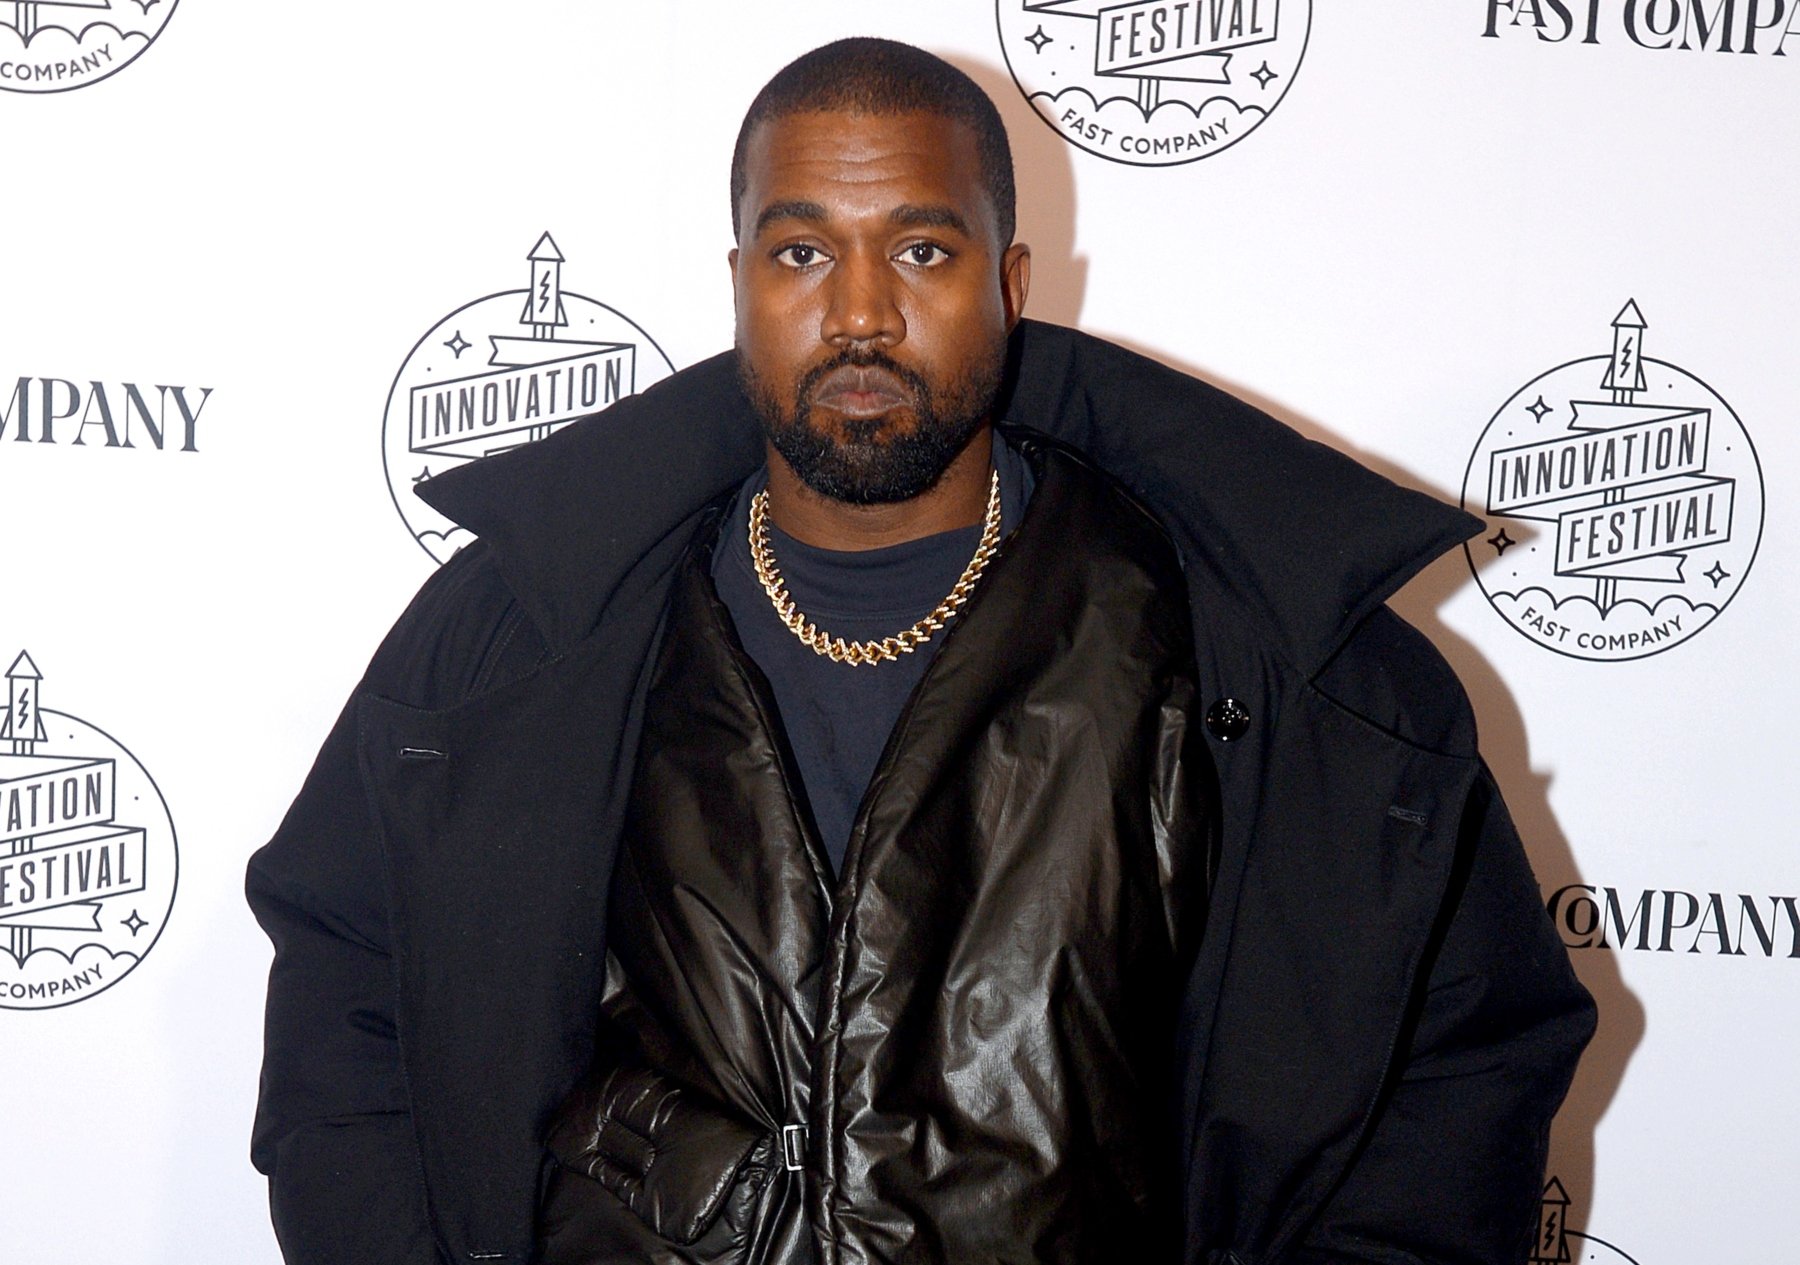 Kanye West, aka Ye, attends Fast Company Innovation Festival, 2019